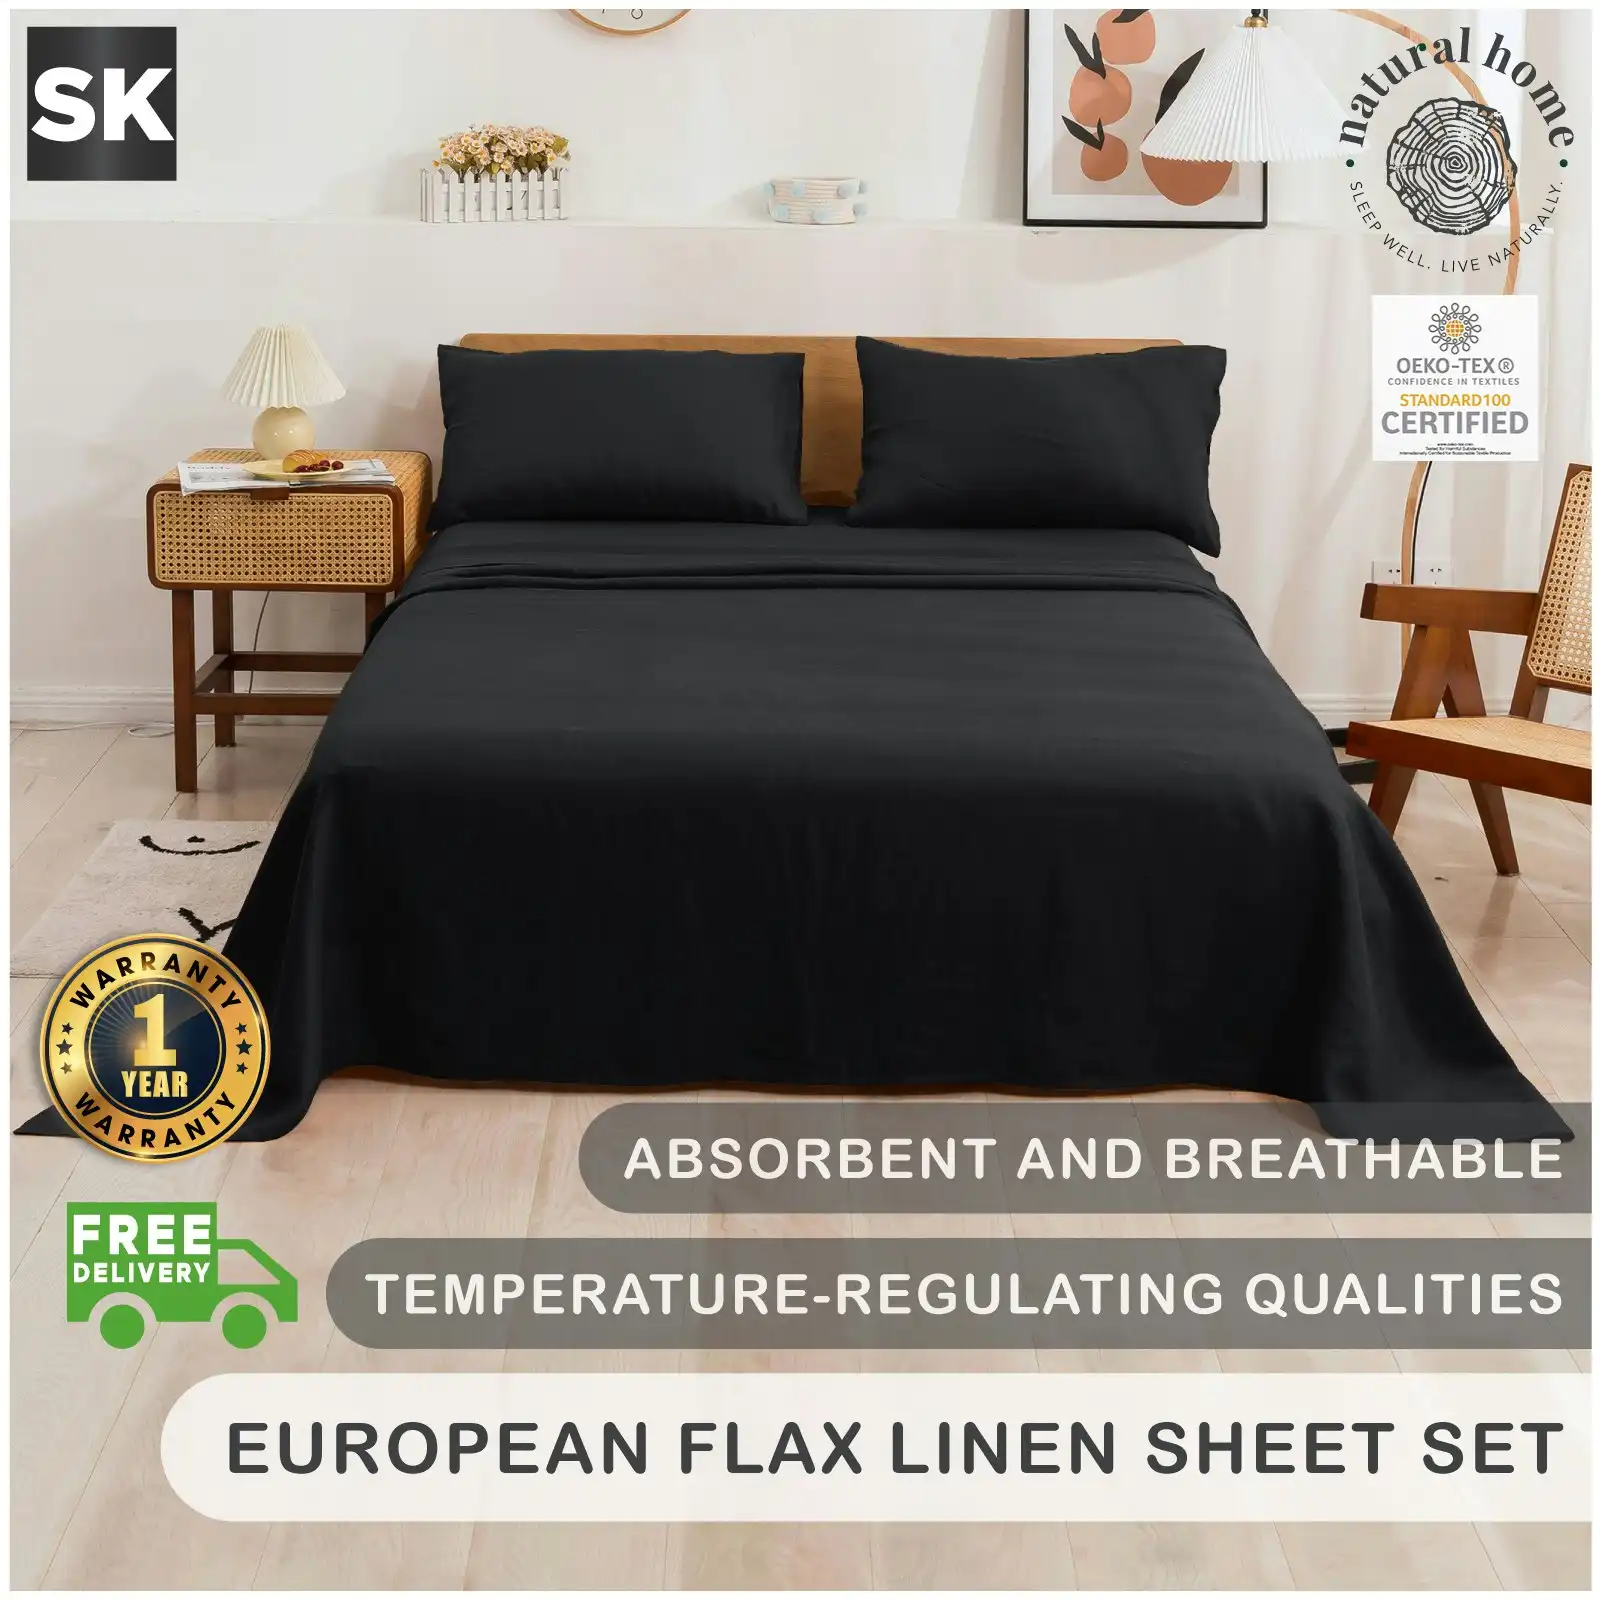 Natural Home 100% European Flax Linen Sheet Set Charcoal Super King Bed